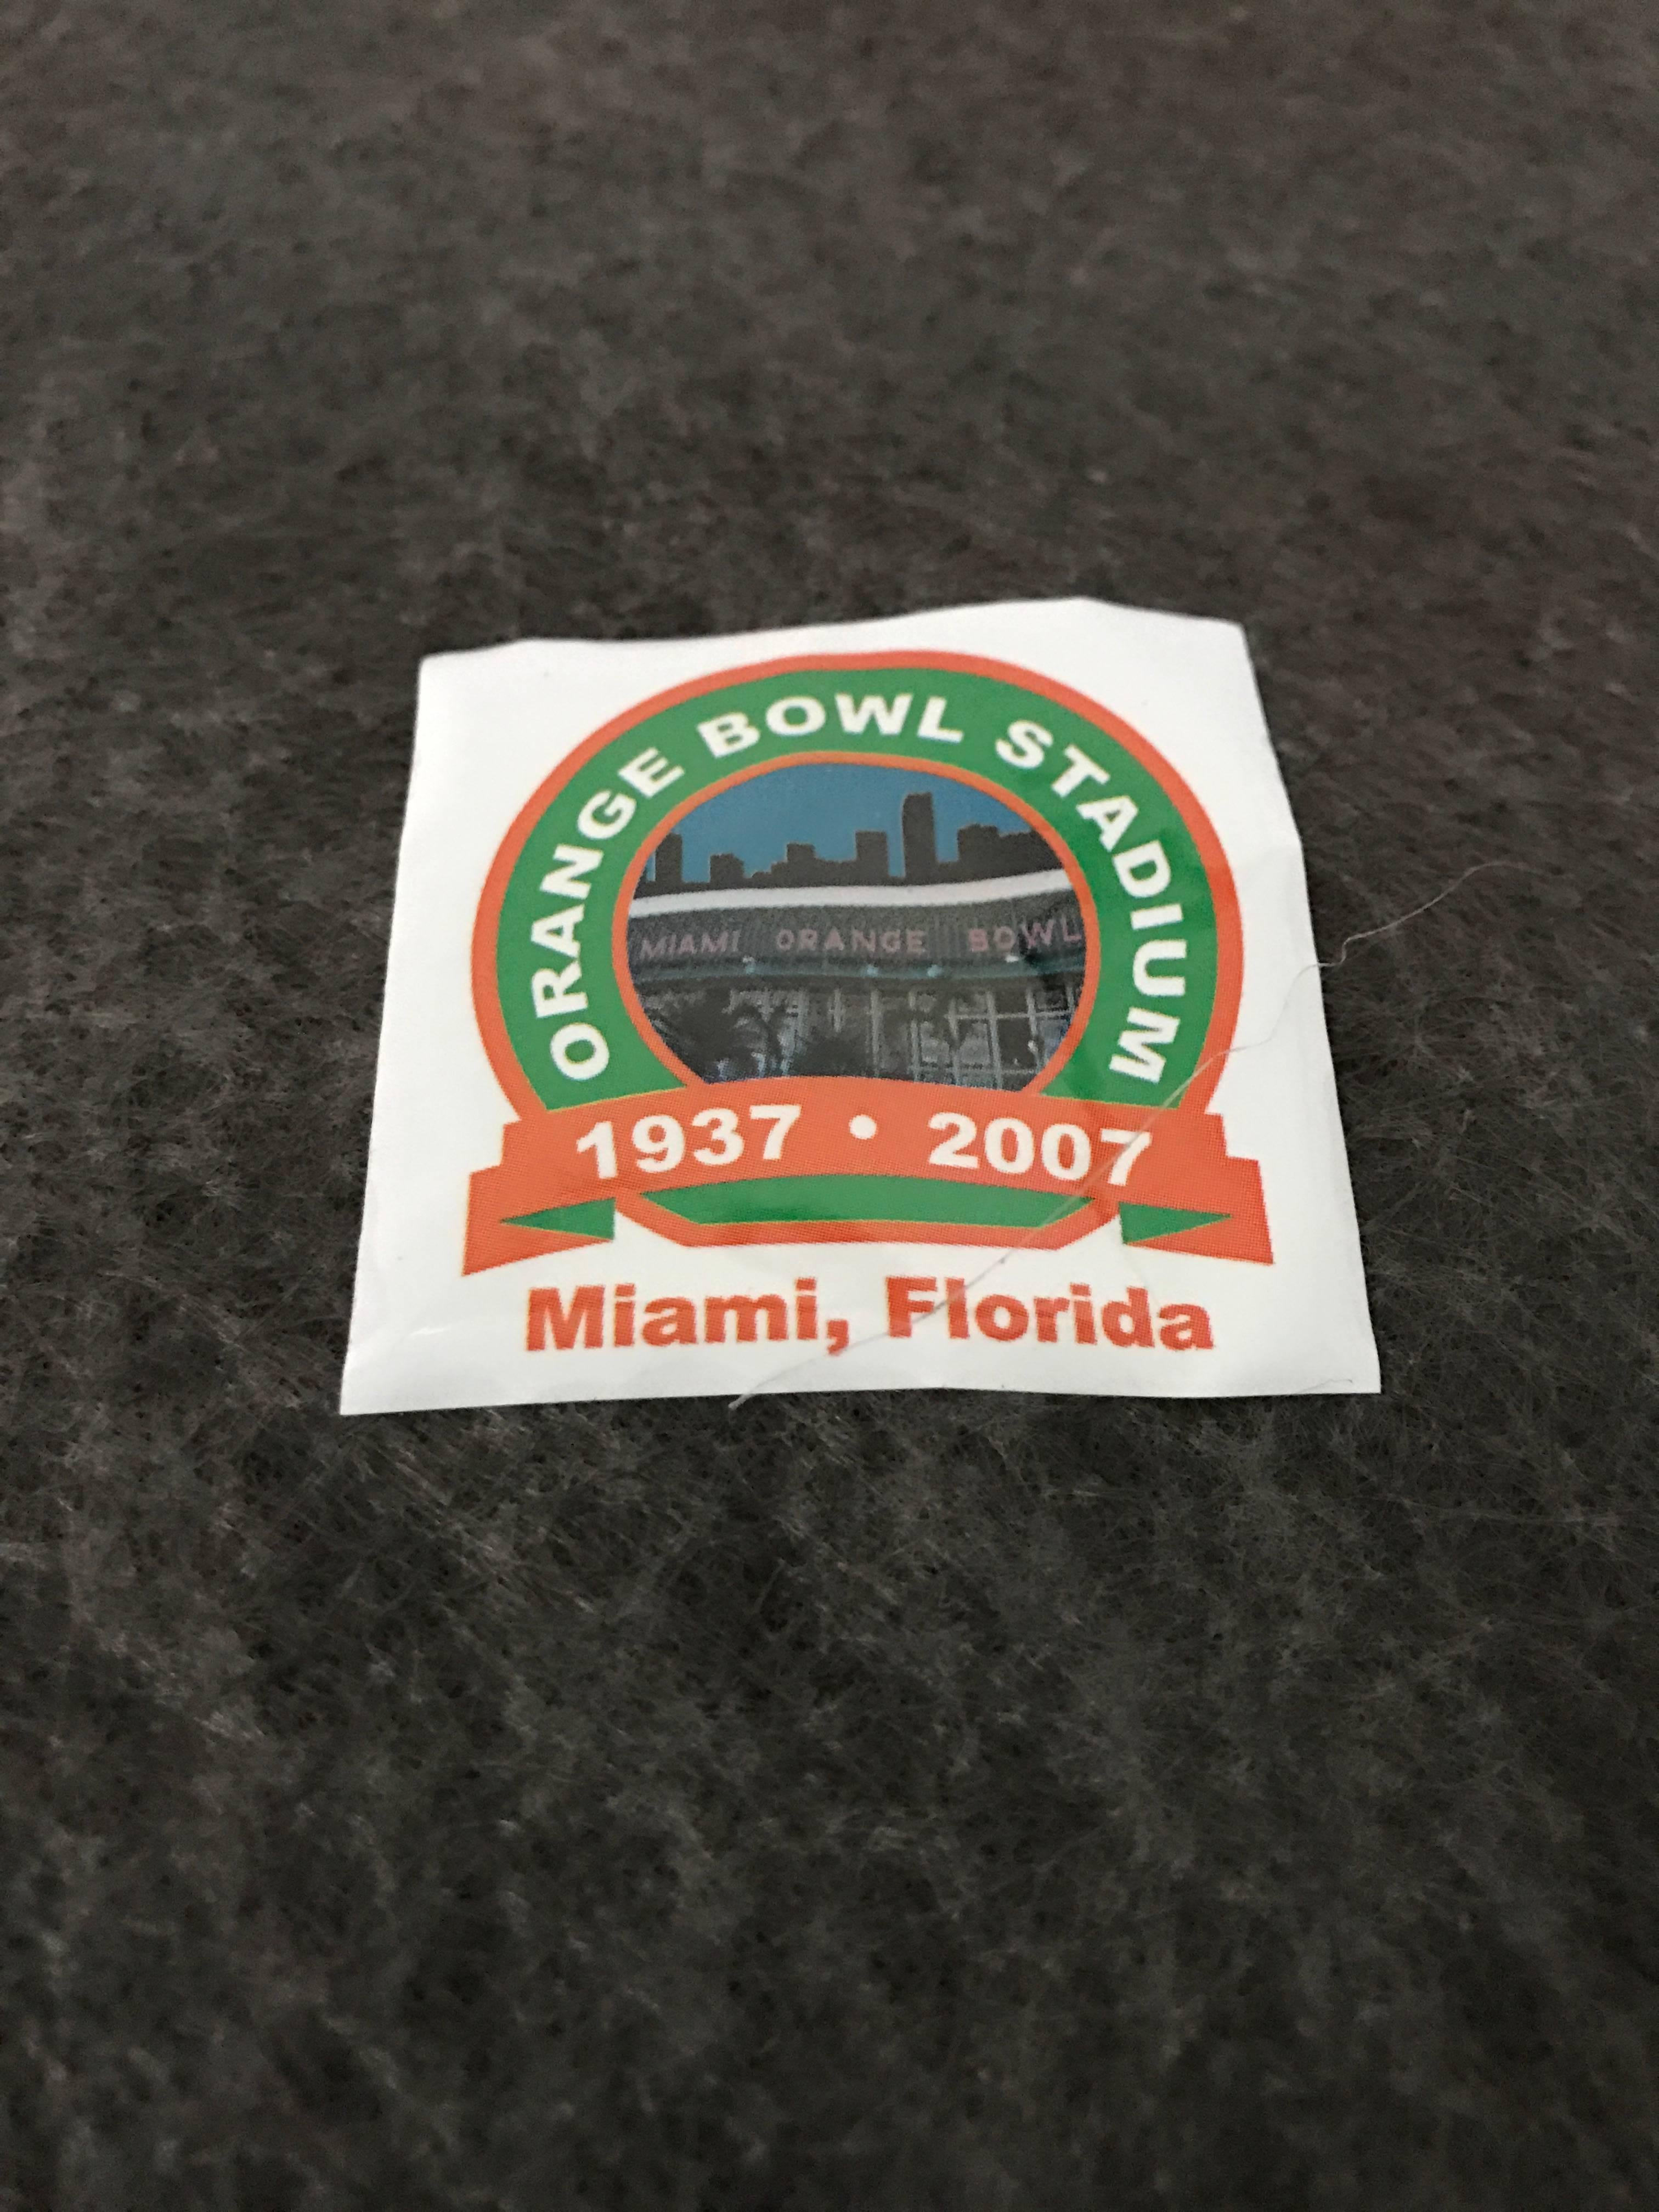 Fabric Pair of Anton Lorenz Bar Stools for Thonet from the Miami Orange Bowl Stadium